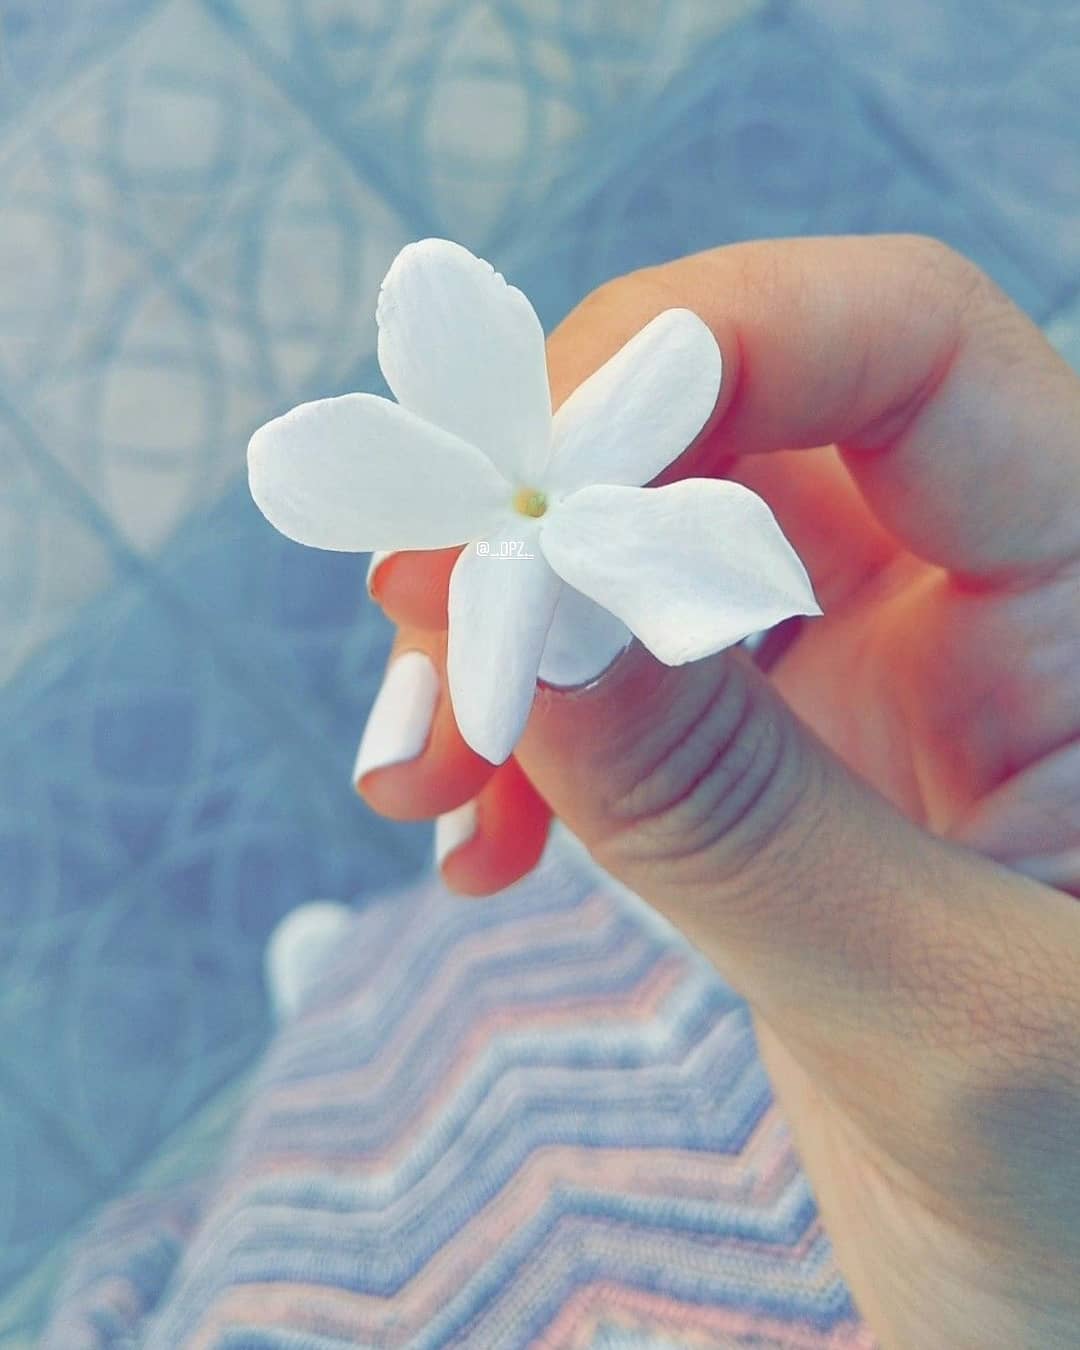 Flower Instagram profile picture